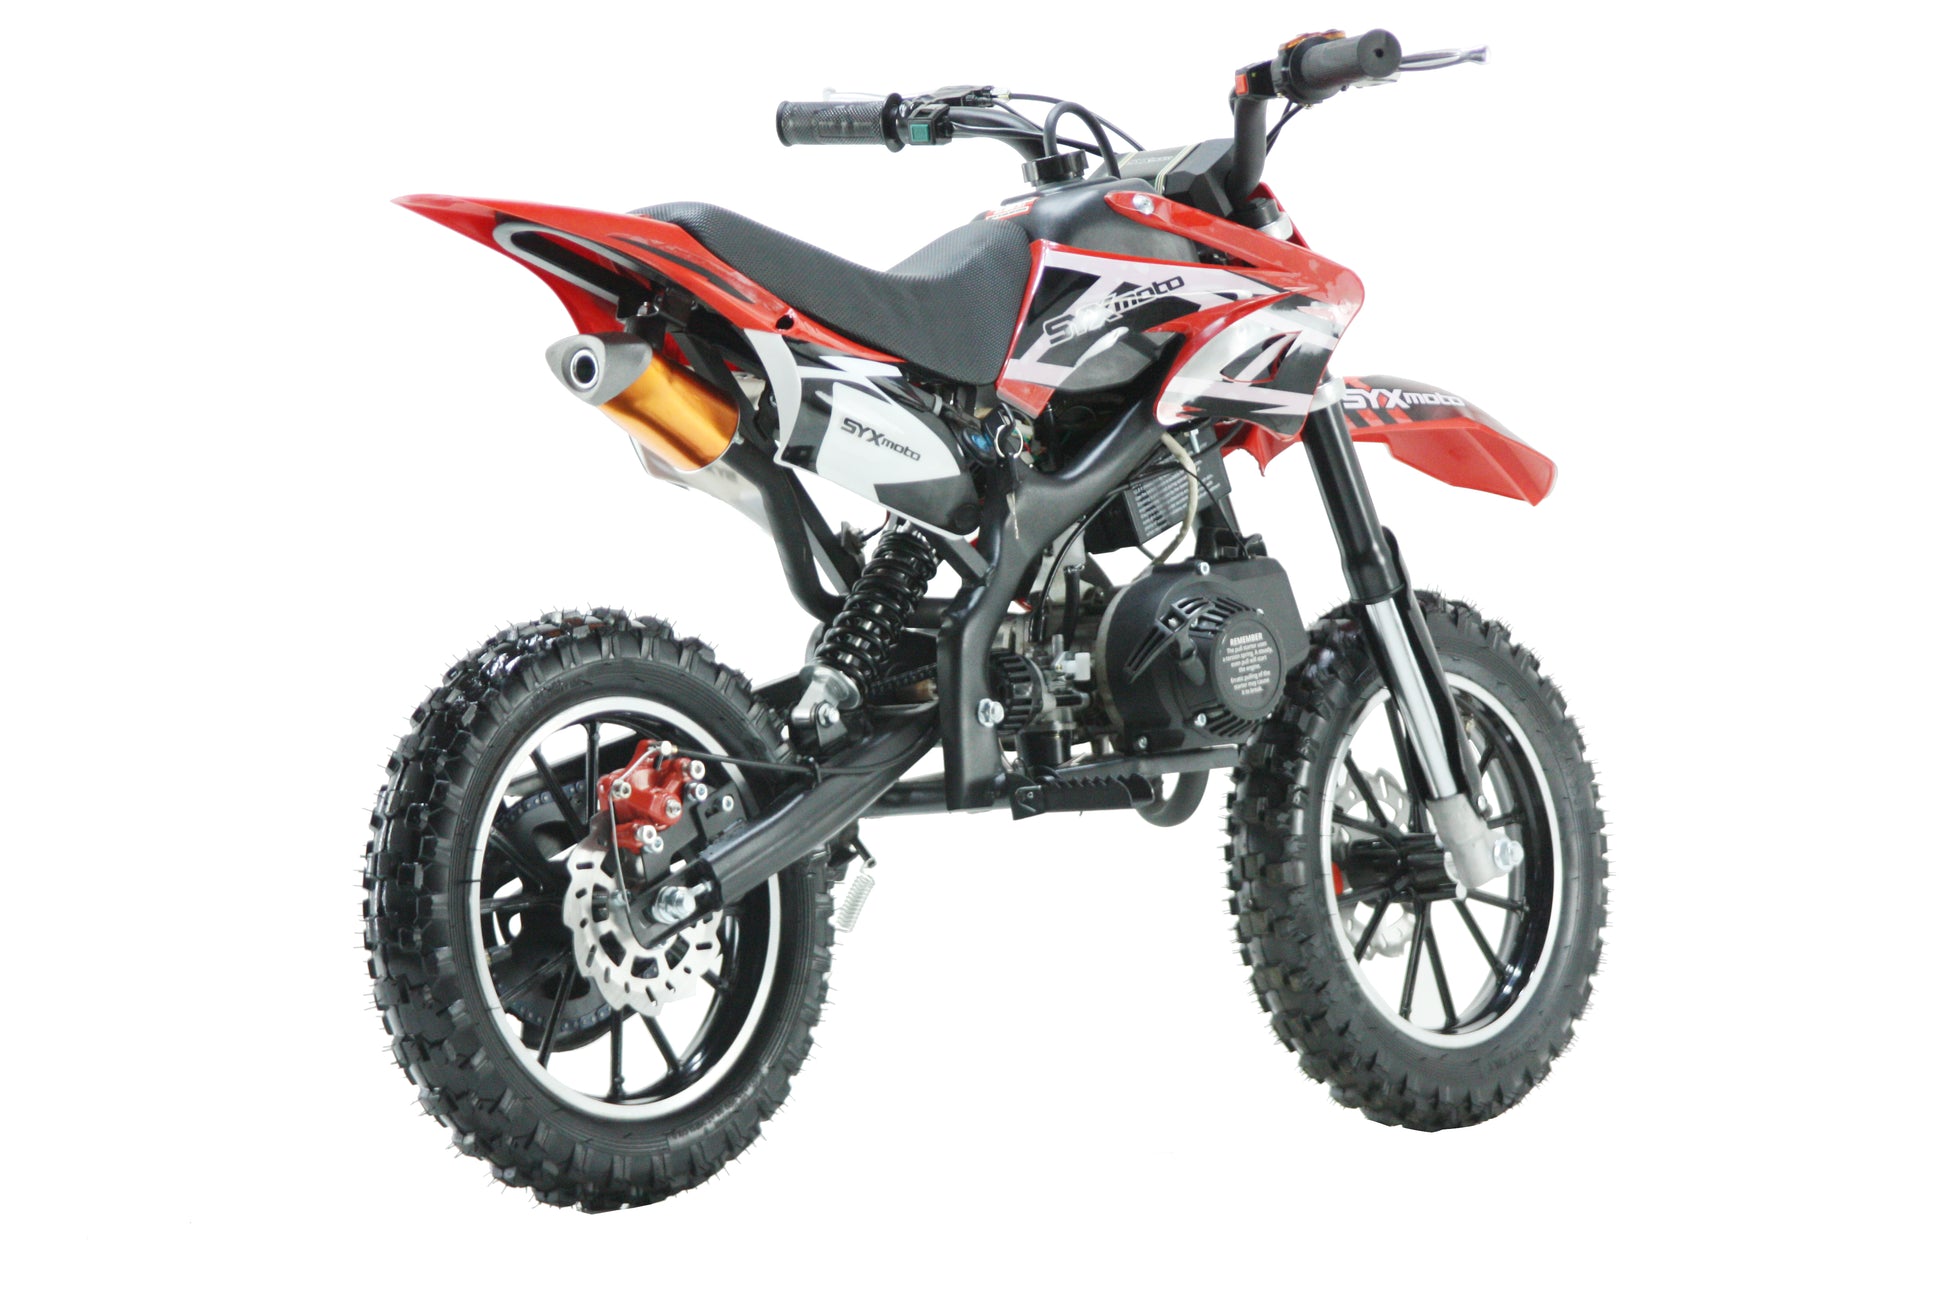 SYX MOTO Blitz Gas Powered Kids Dirt Bike, 50cc 2 Stroke, Pull